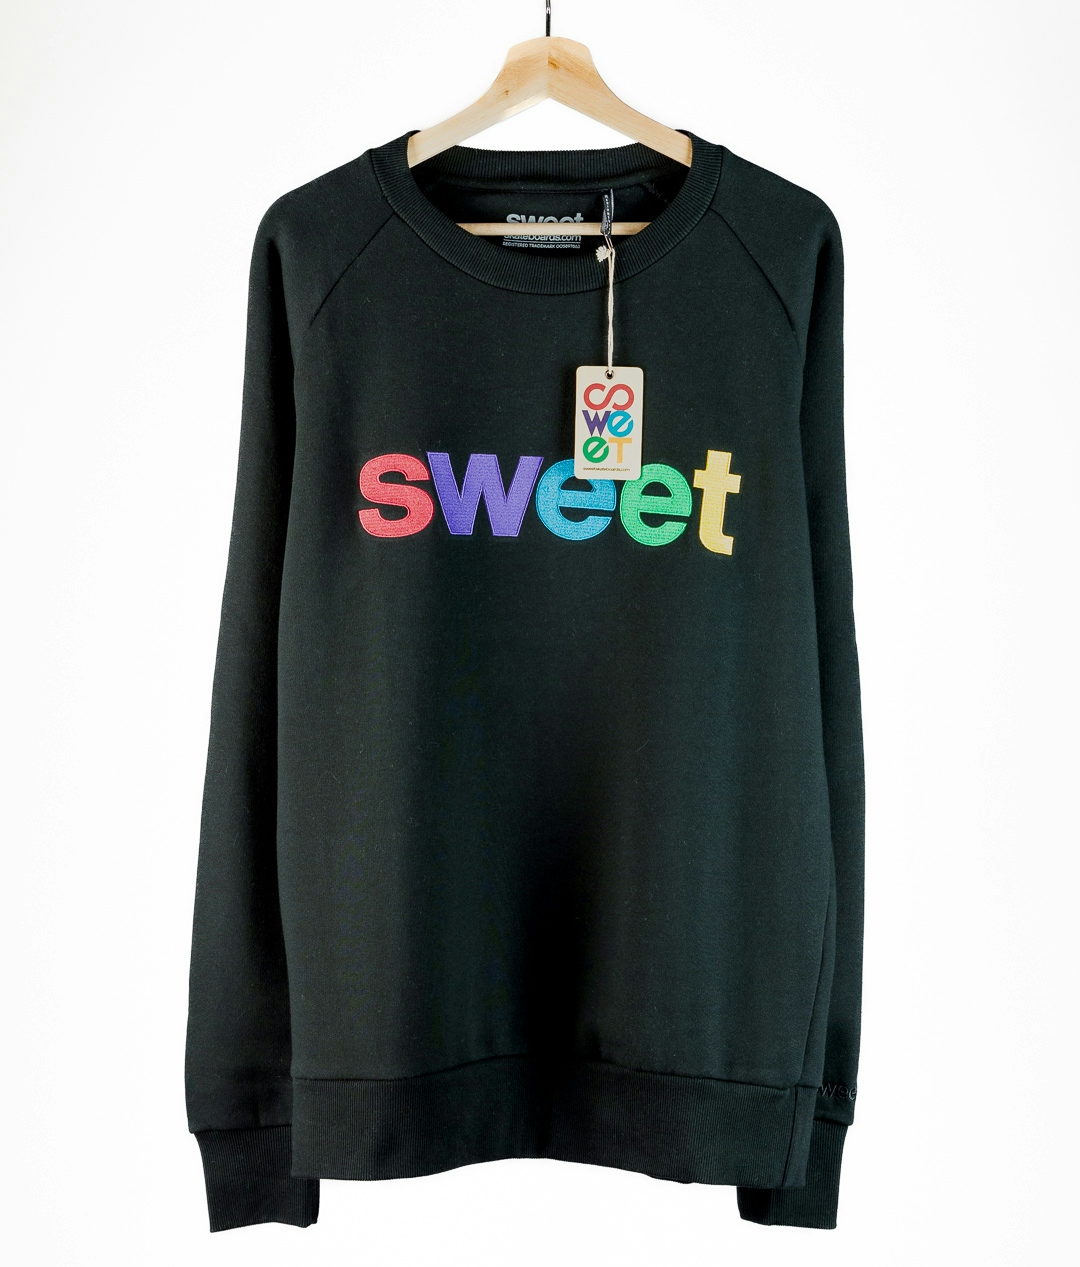 Vintage & Second Hand Sweet Sktbs - Steew Sweater Black 1